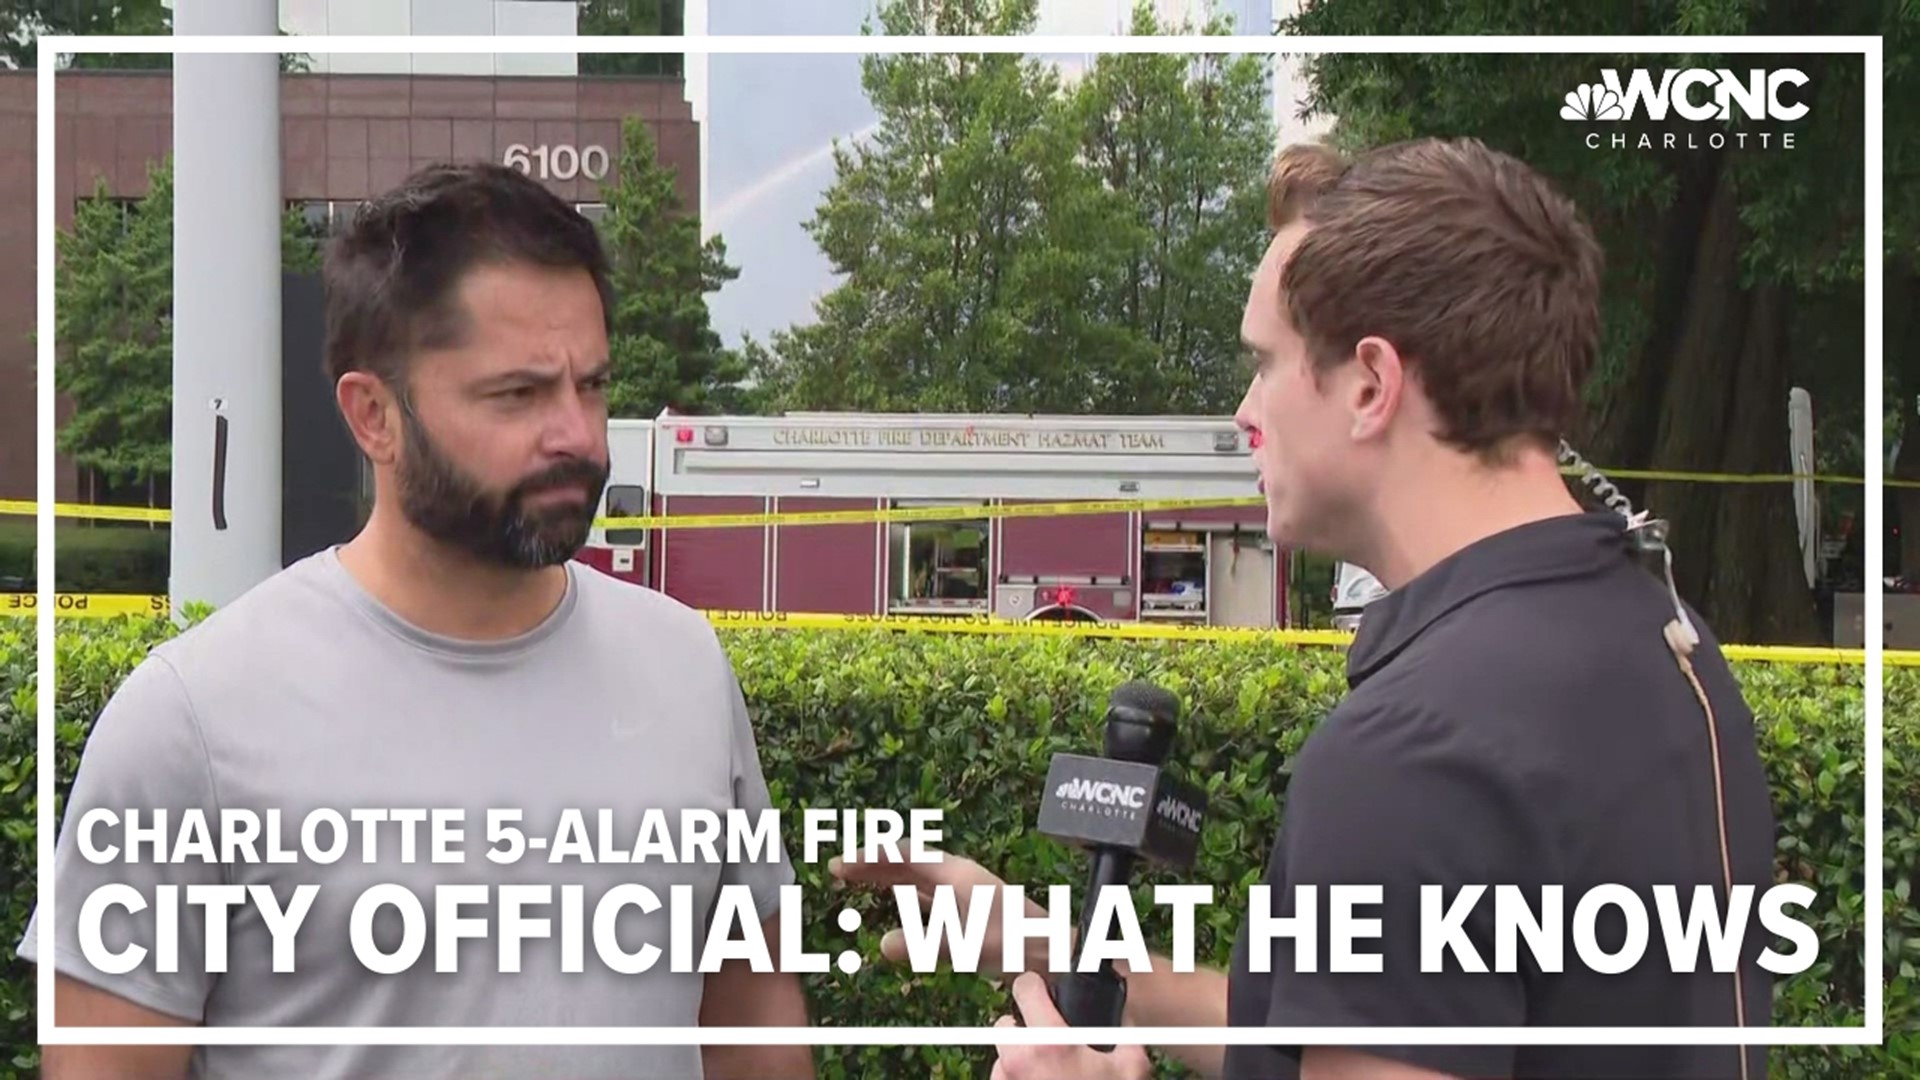 Tariq Bokhari, Charlotte's district six representative, shares what he knows about the 5-alarm fire near Southpark Mall.